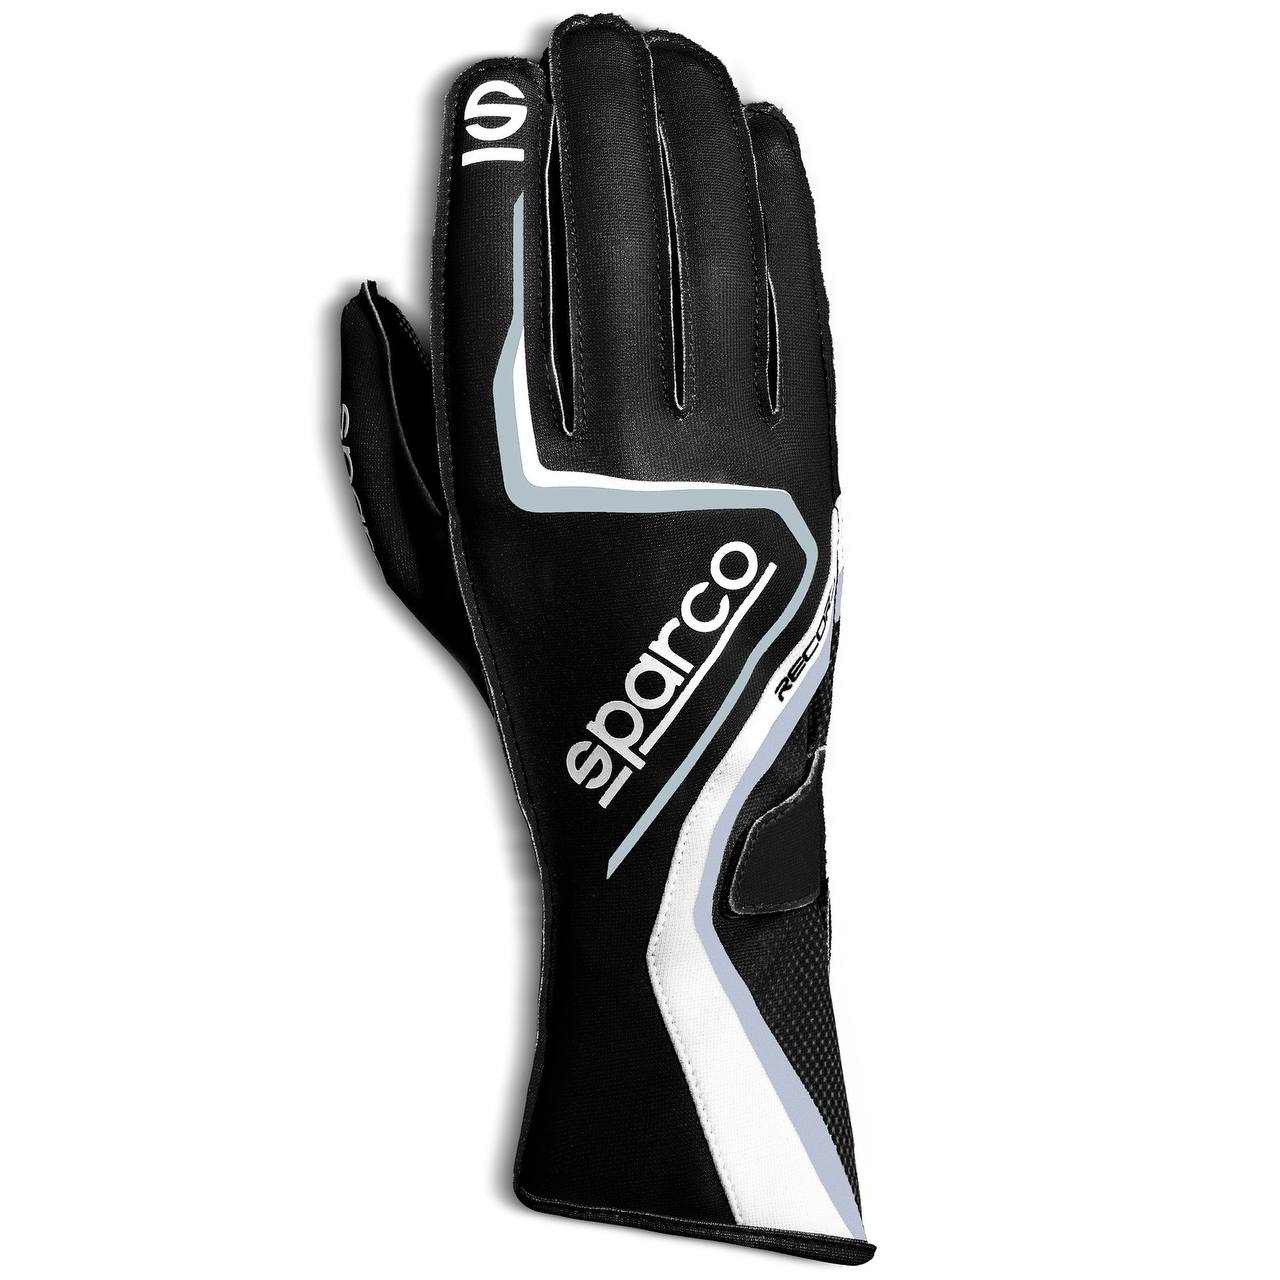 Sparco RECORD WP перчатки для картинга, черный, р-р 13. DARK-STOCK.RU